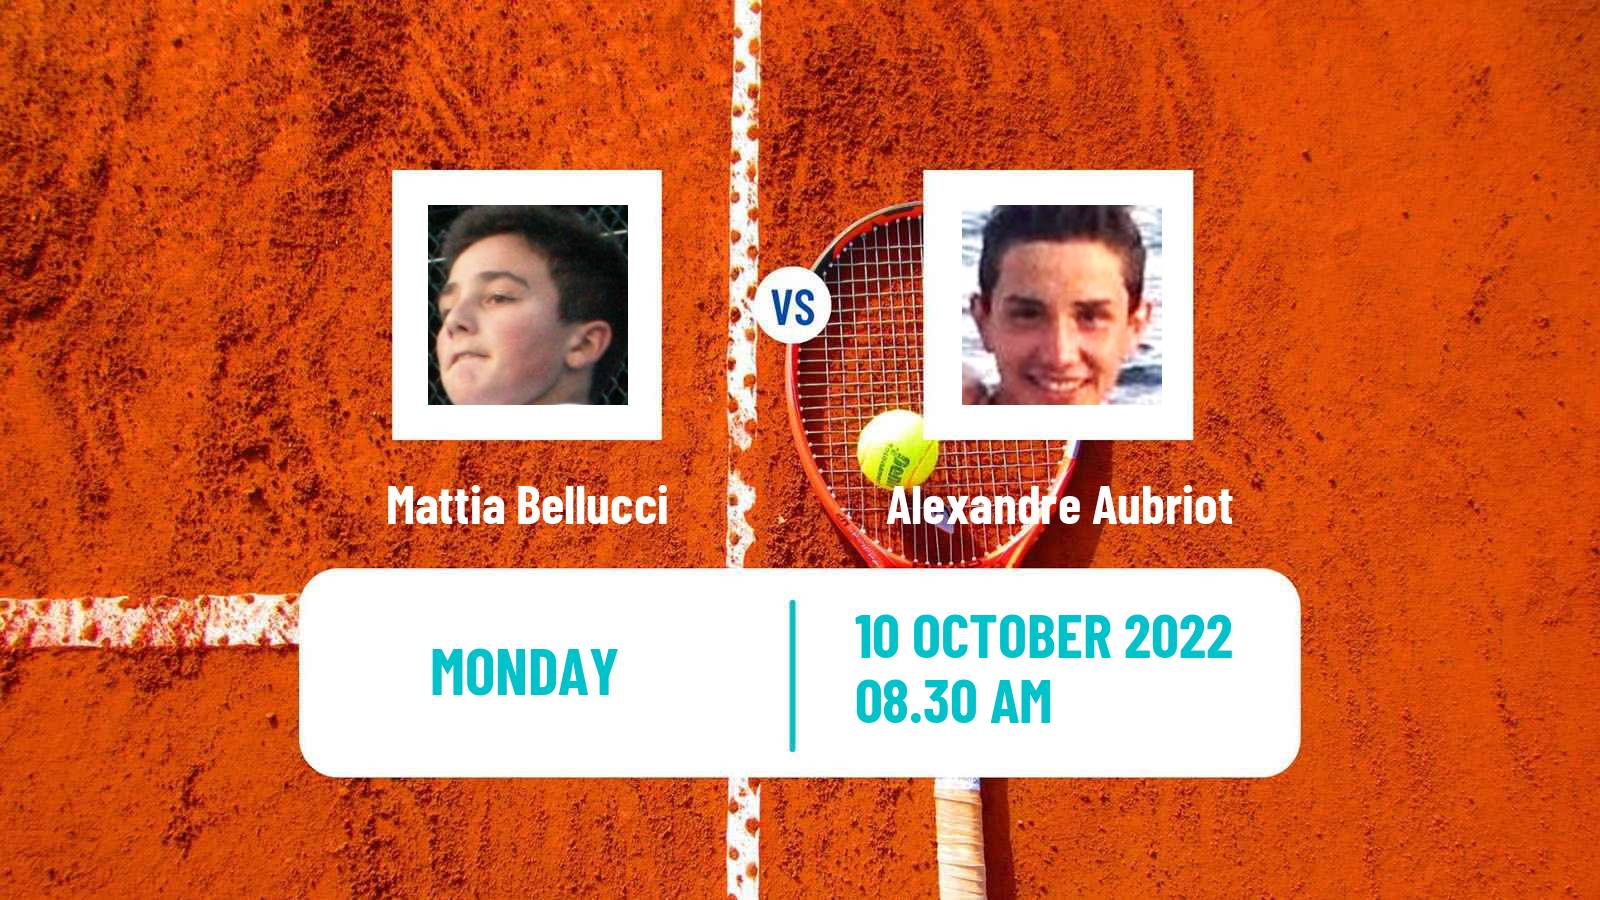 Tennis ATP Challenger Mattia Bellucci - Alexandre Aubriot